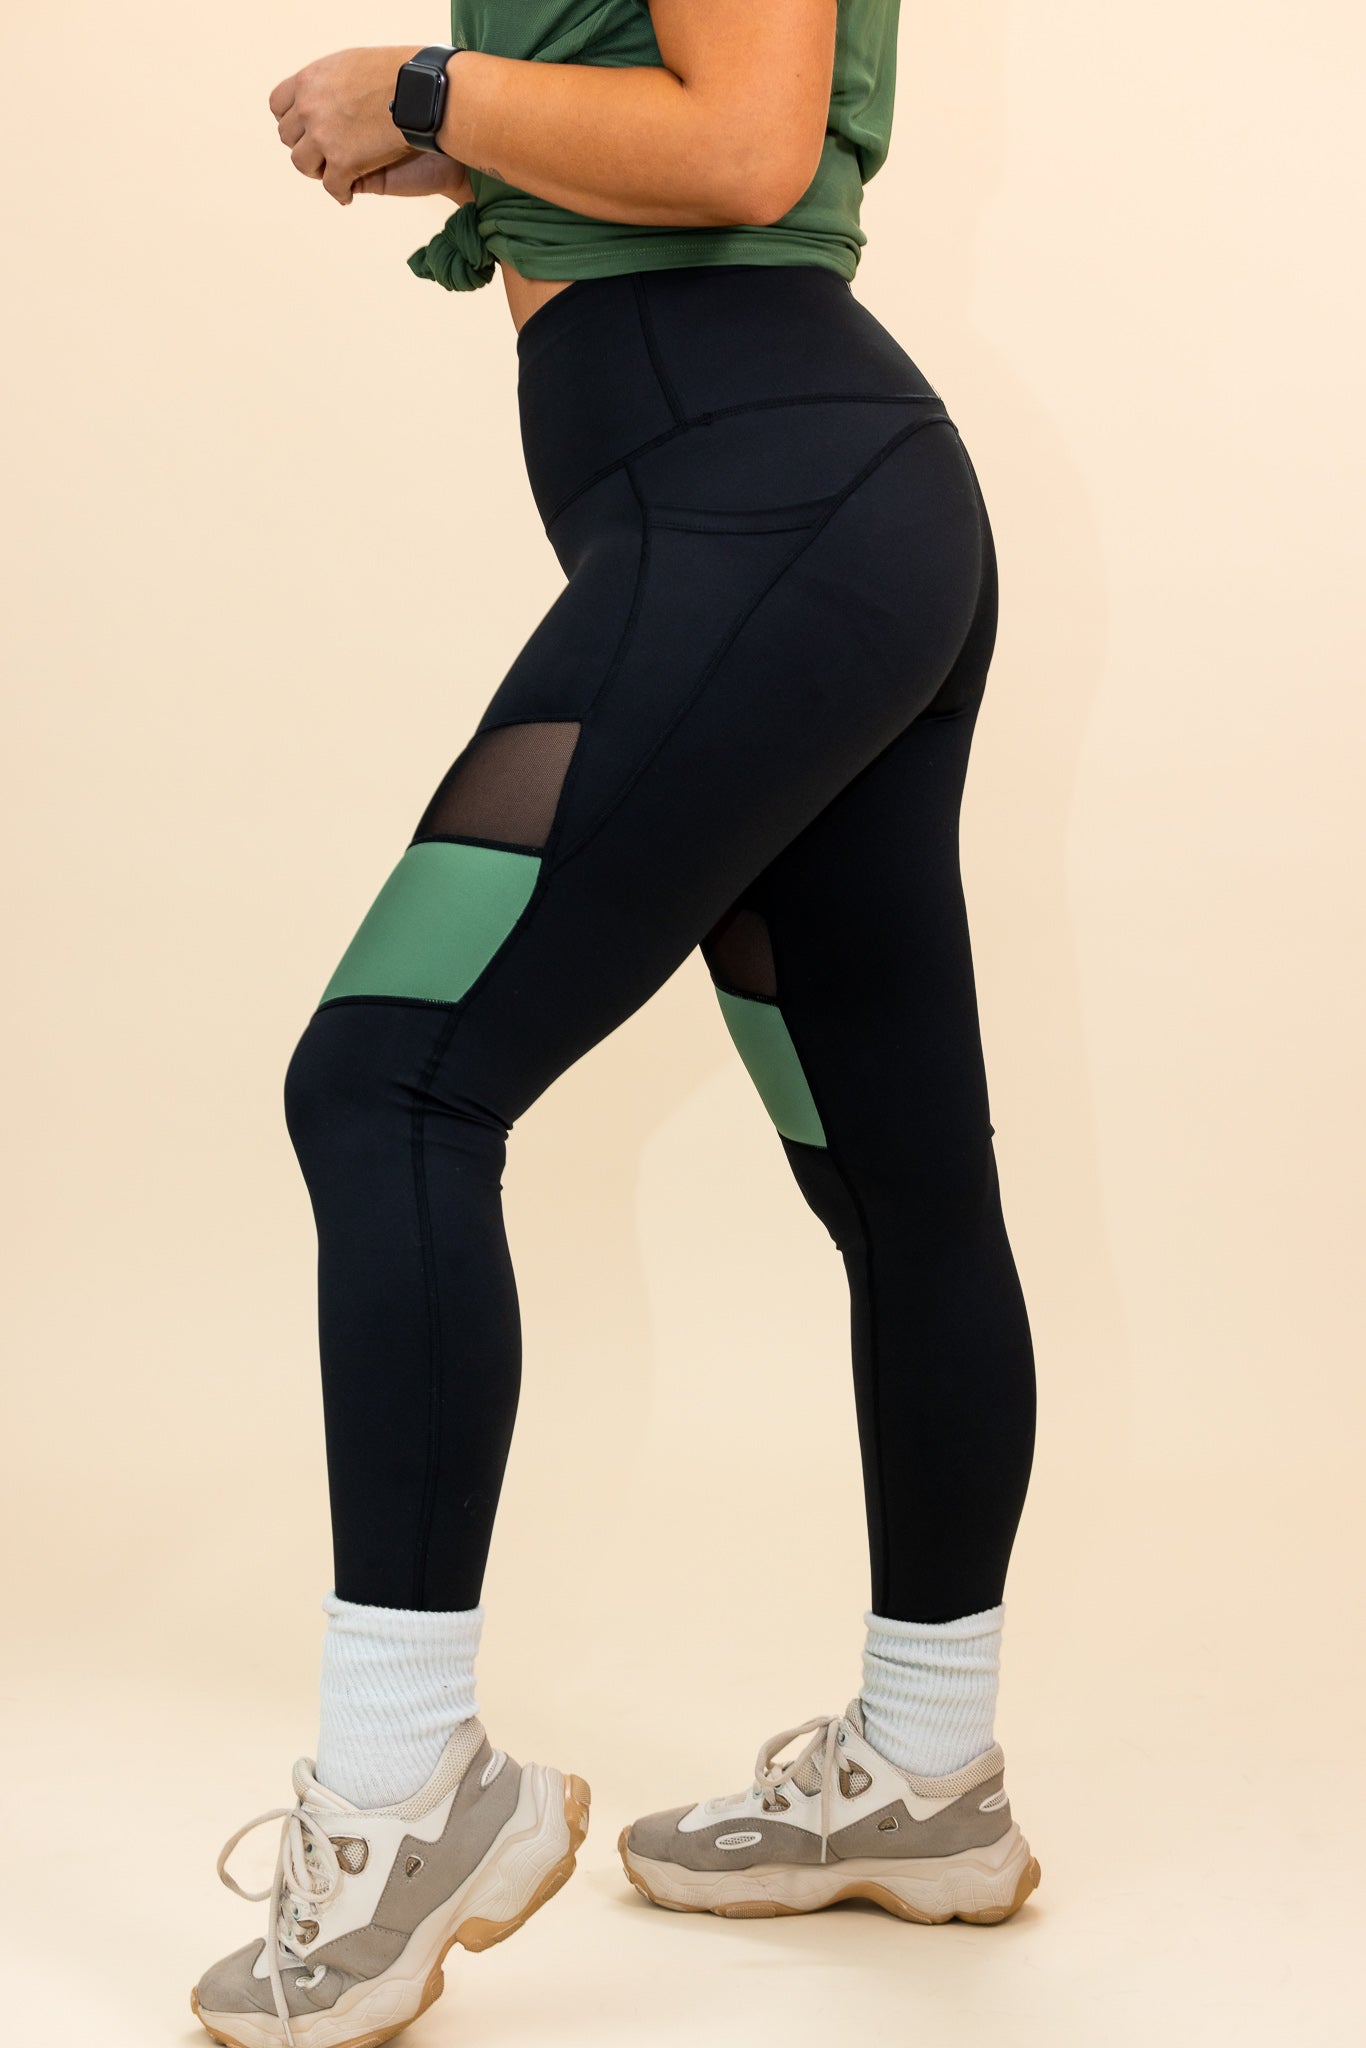 Black Mesh Panel Gym Legging, Active